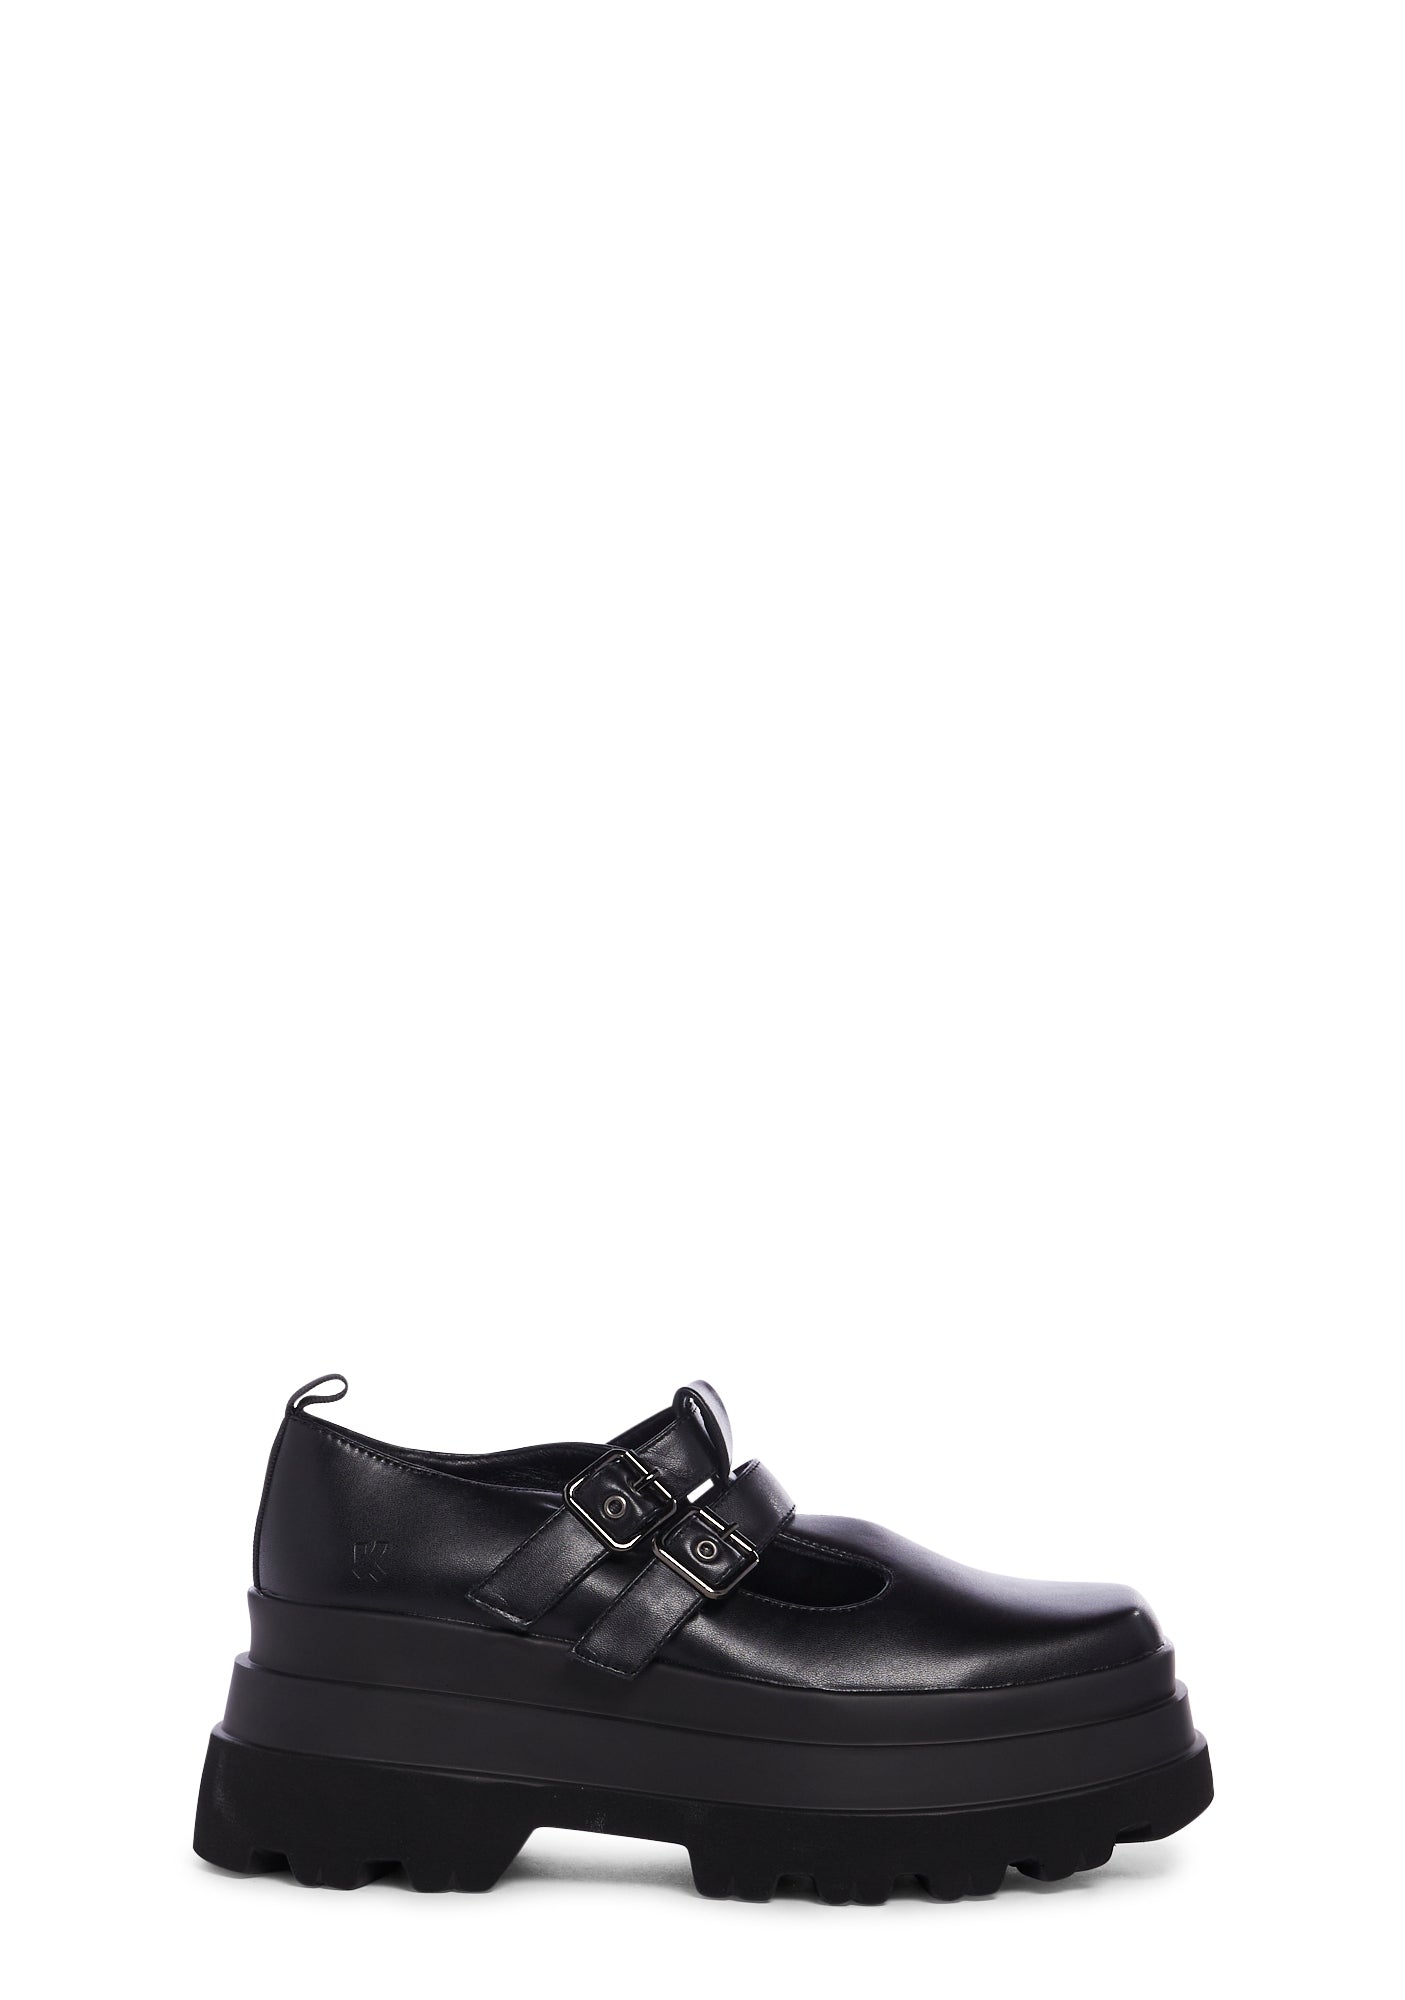 Koi Footwear Chunky Platform Mary Janes - Black